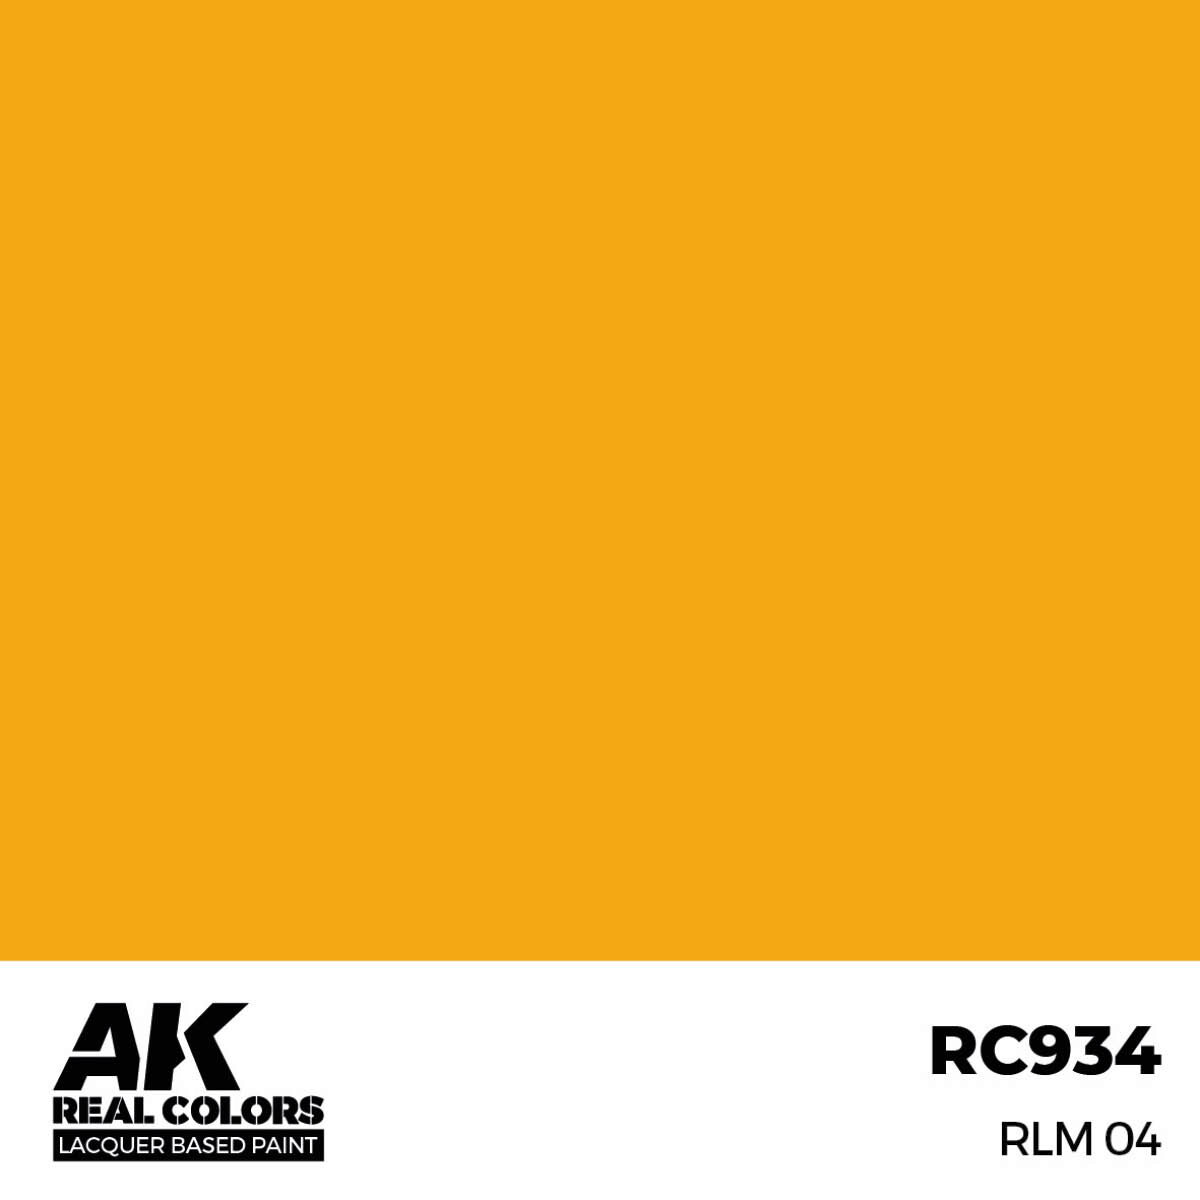 AK RC934 Real Colors RLM 04 17 ml.